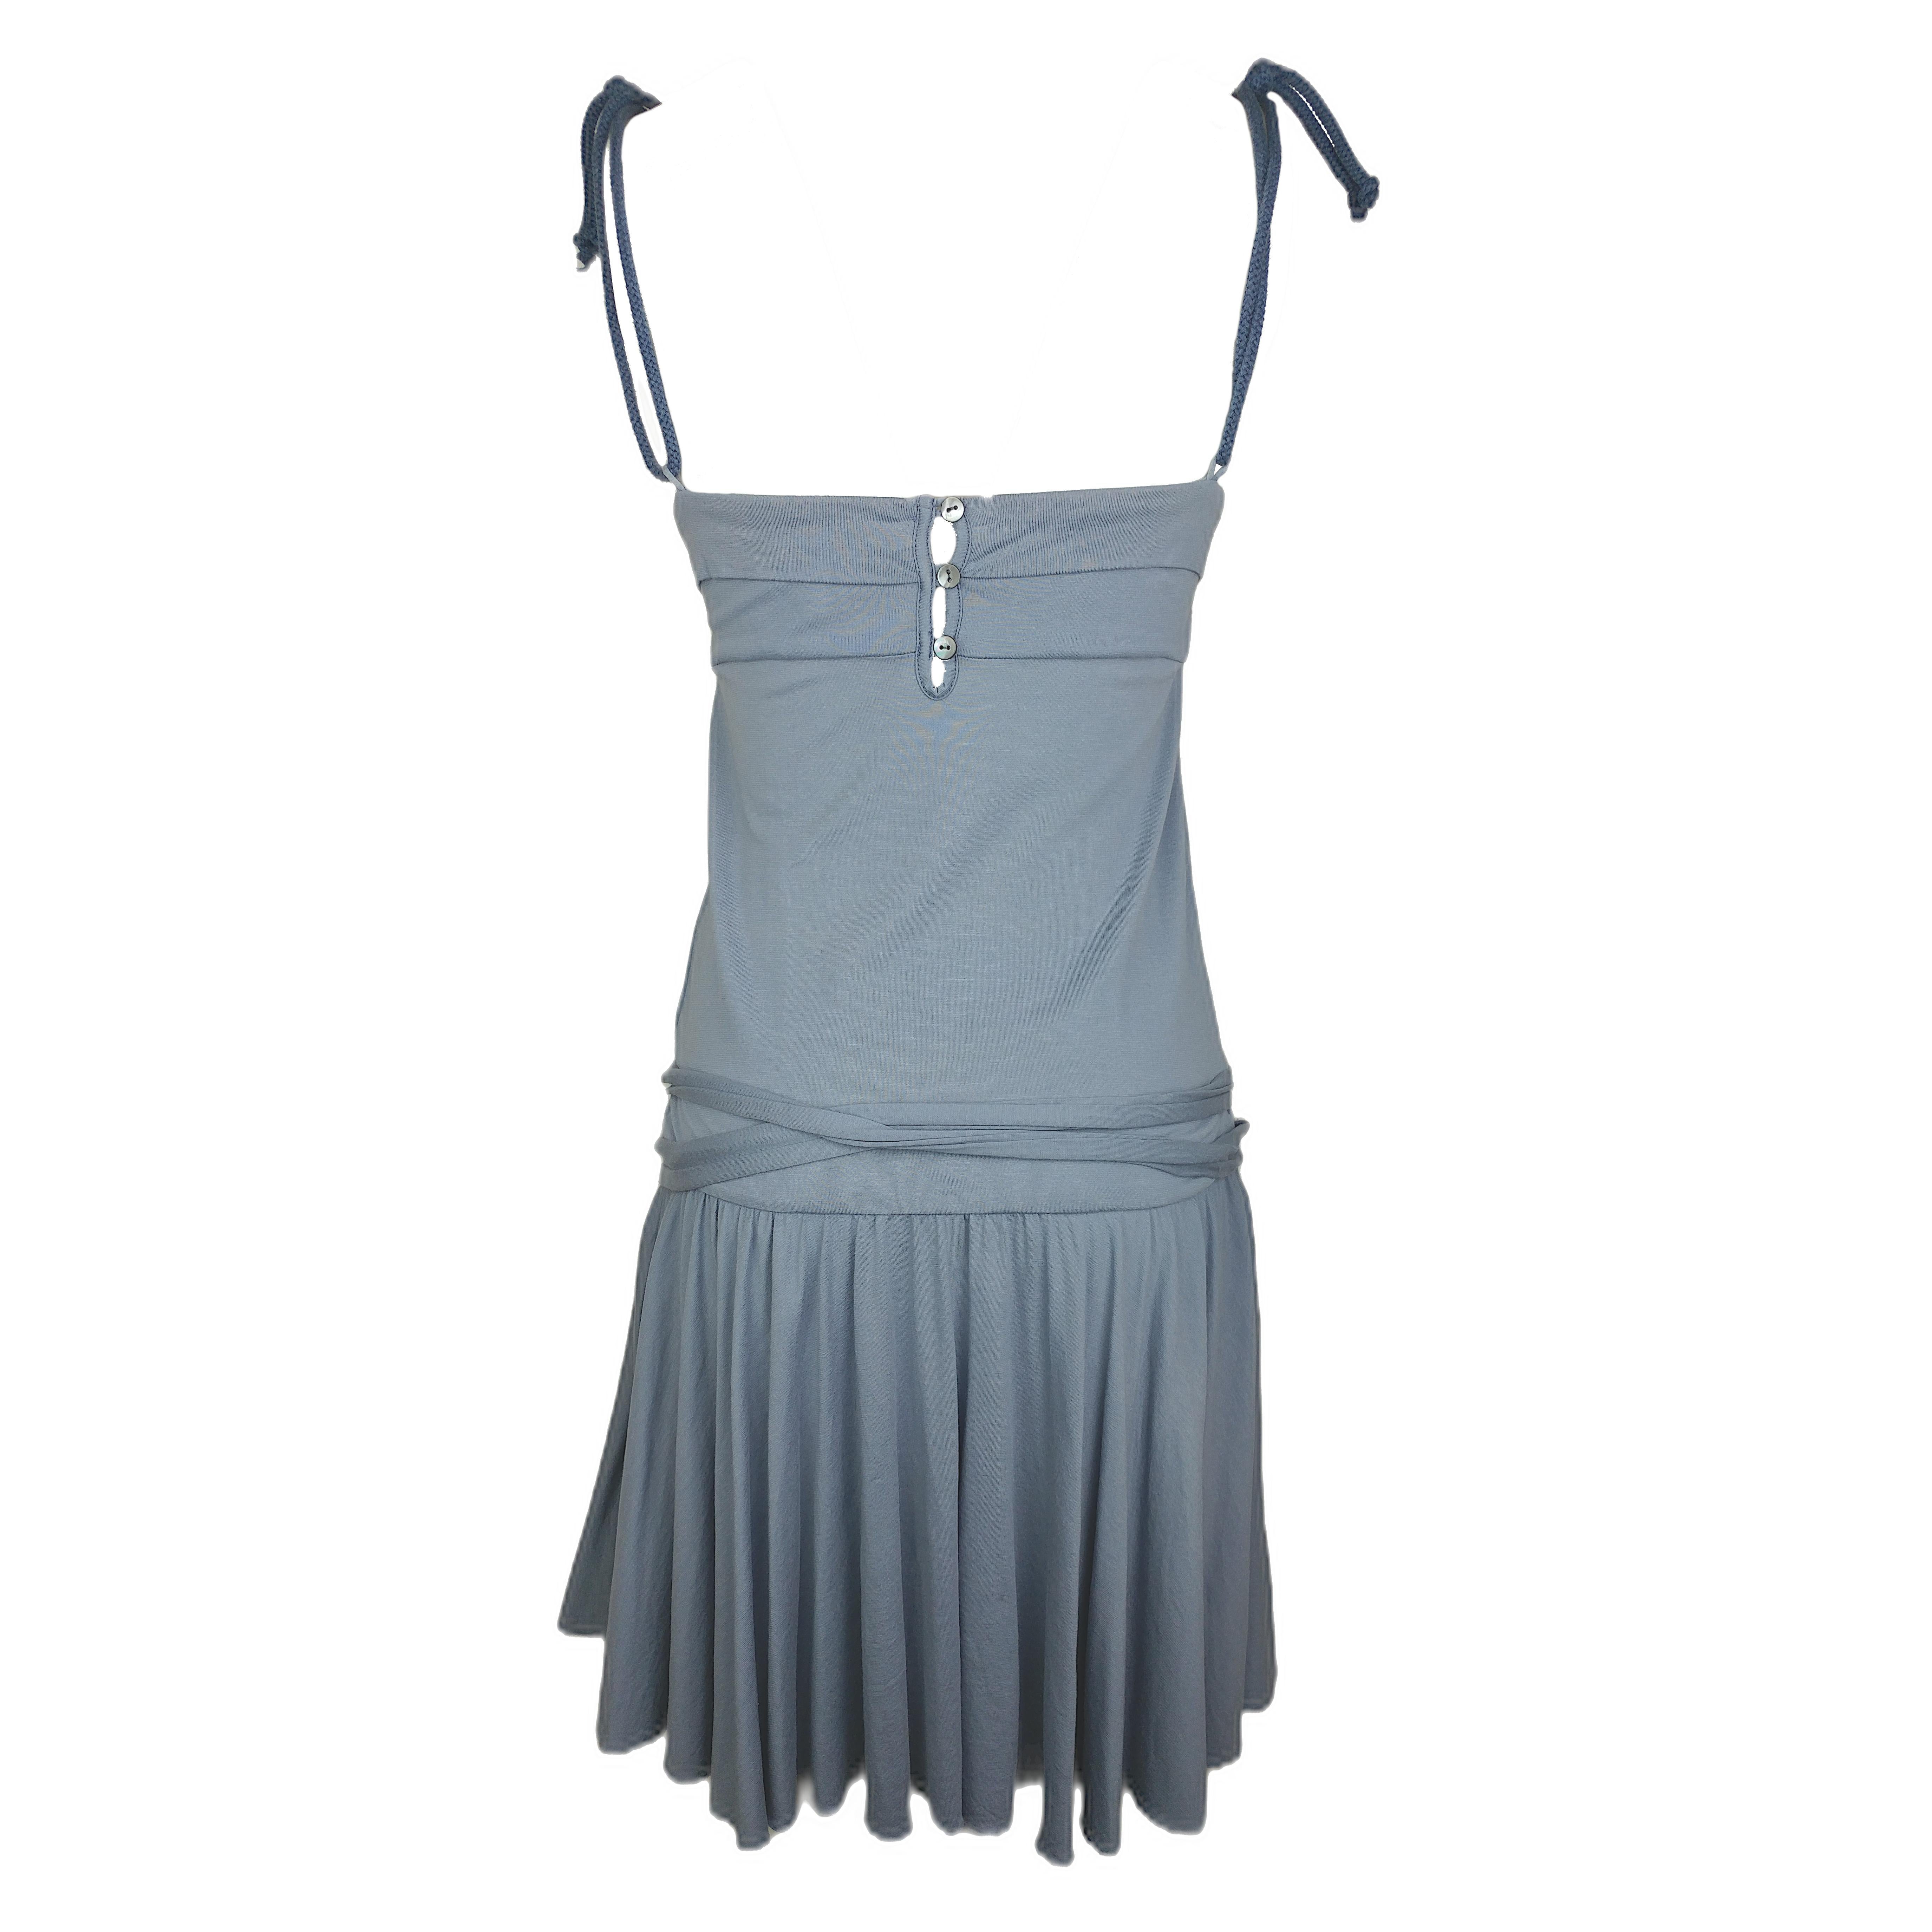 Gray EMPORIO ARMANI – SS '08 Turquoise Sleeveless Dress with Circle Skirt  Size 4US